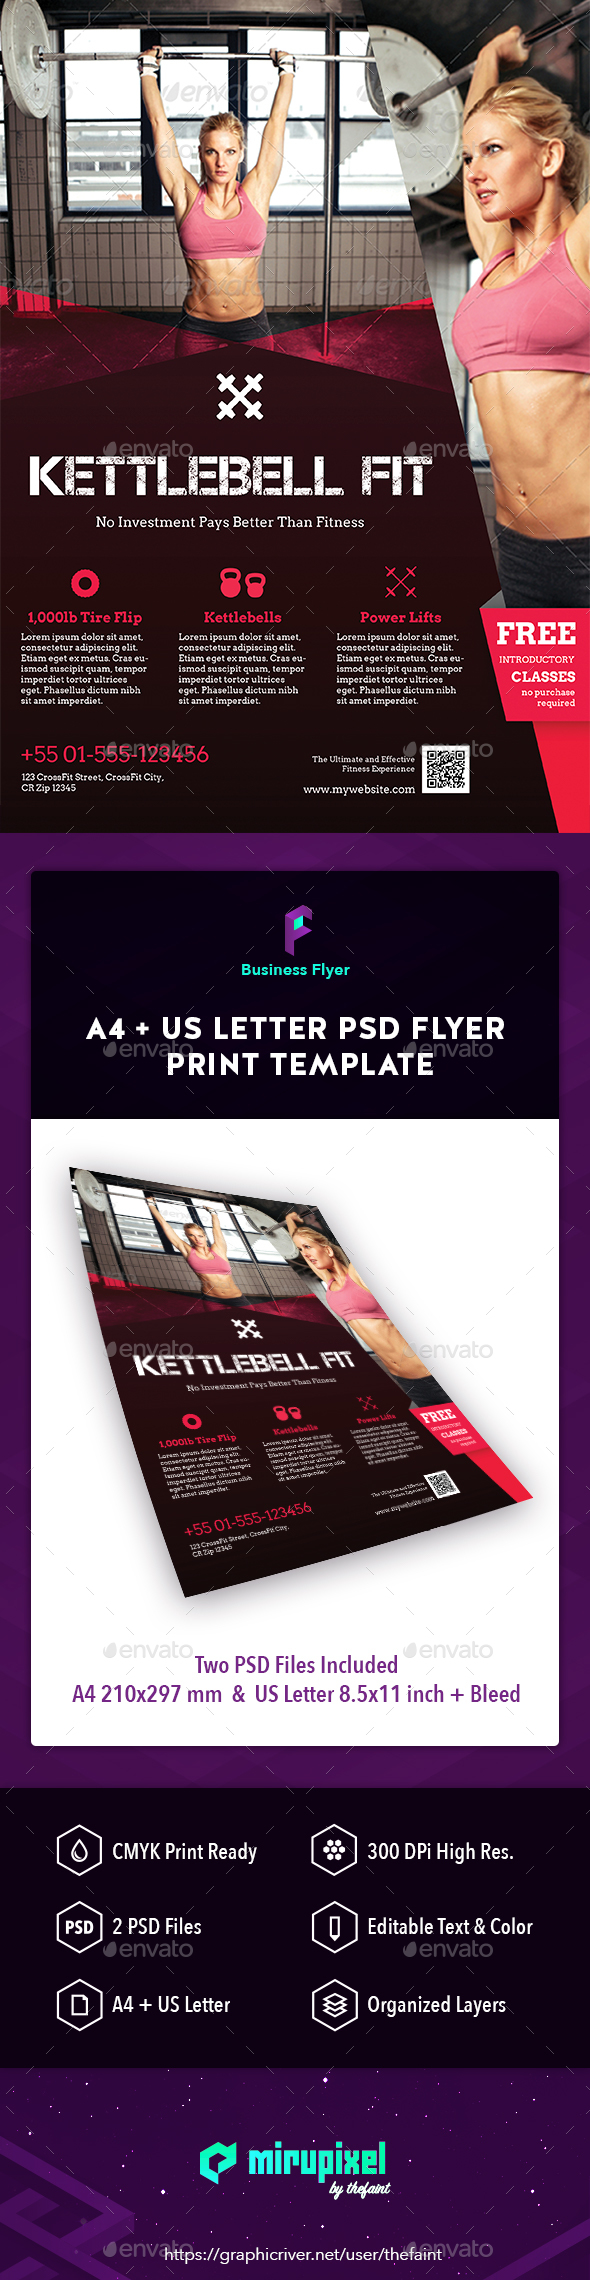 Business Flyer - Kettlebell Fit